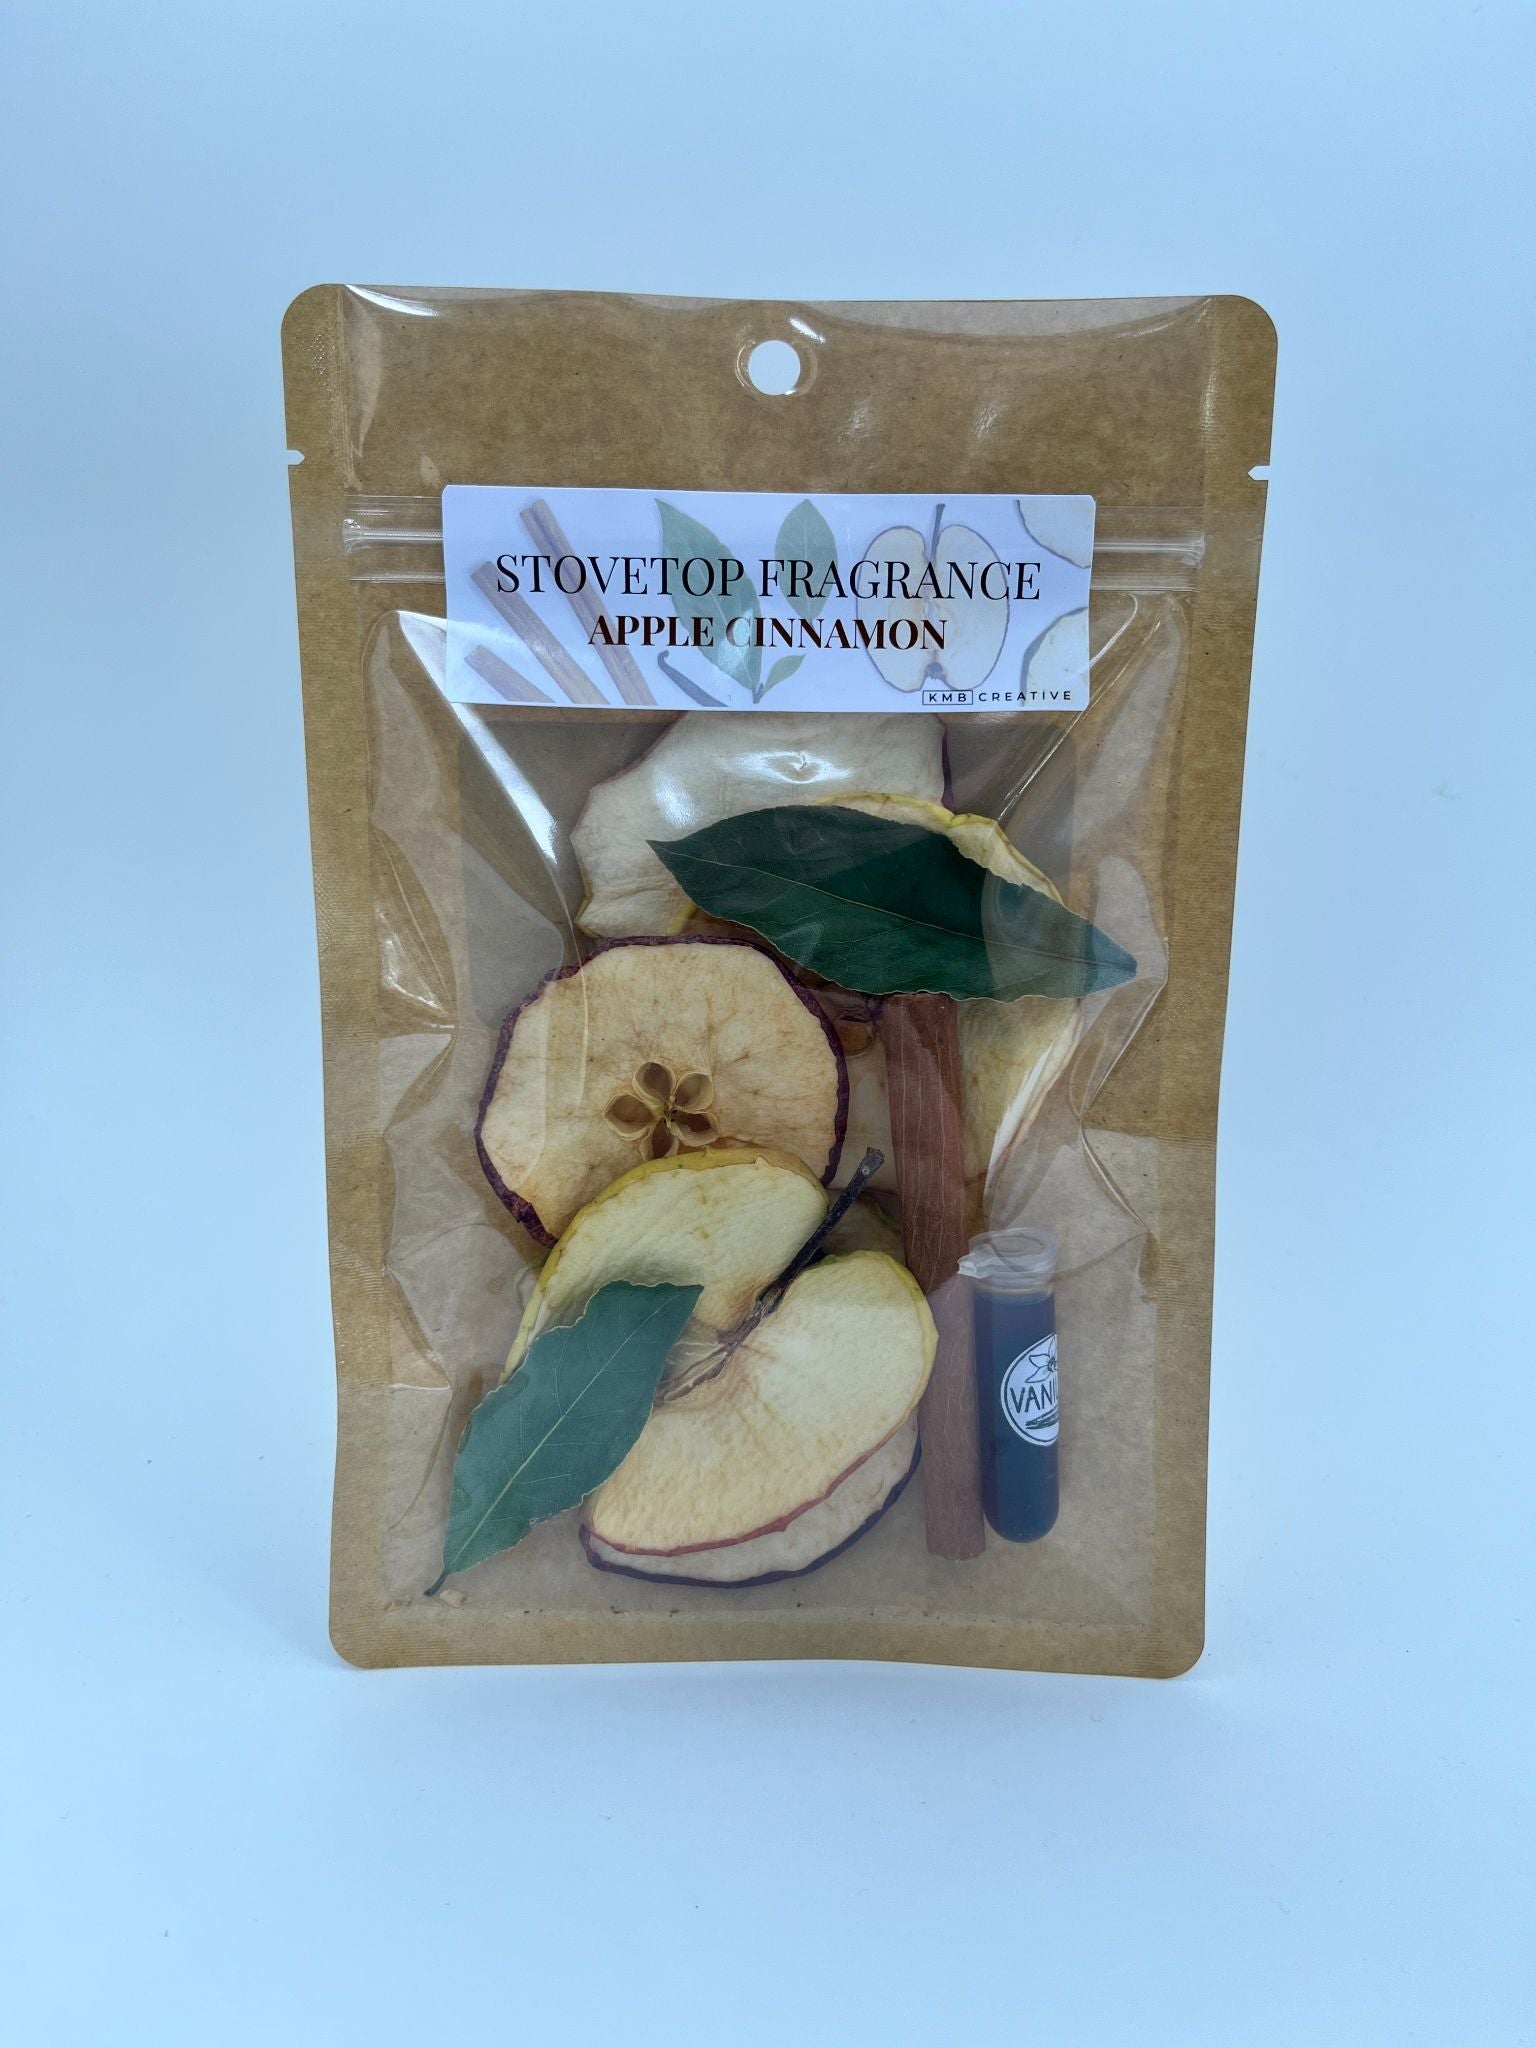 082-003 - Apple Cinnamon Stovetop Fragrance - 1